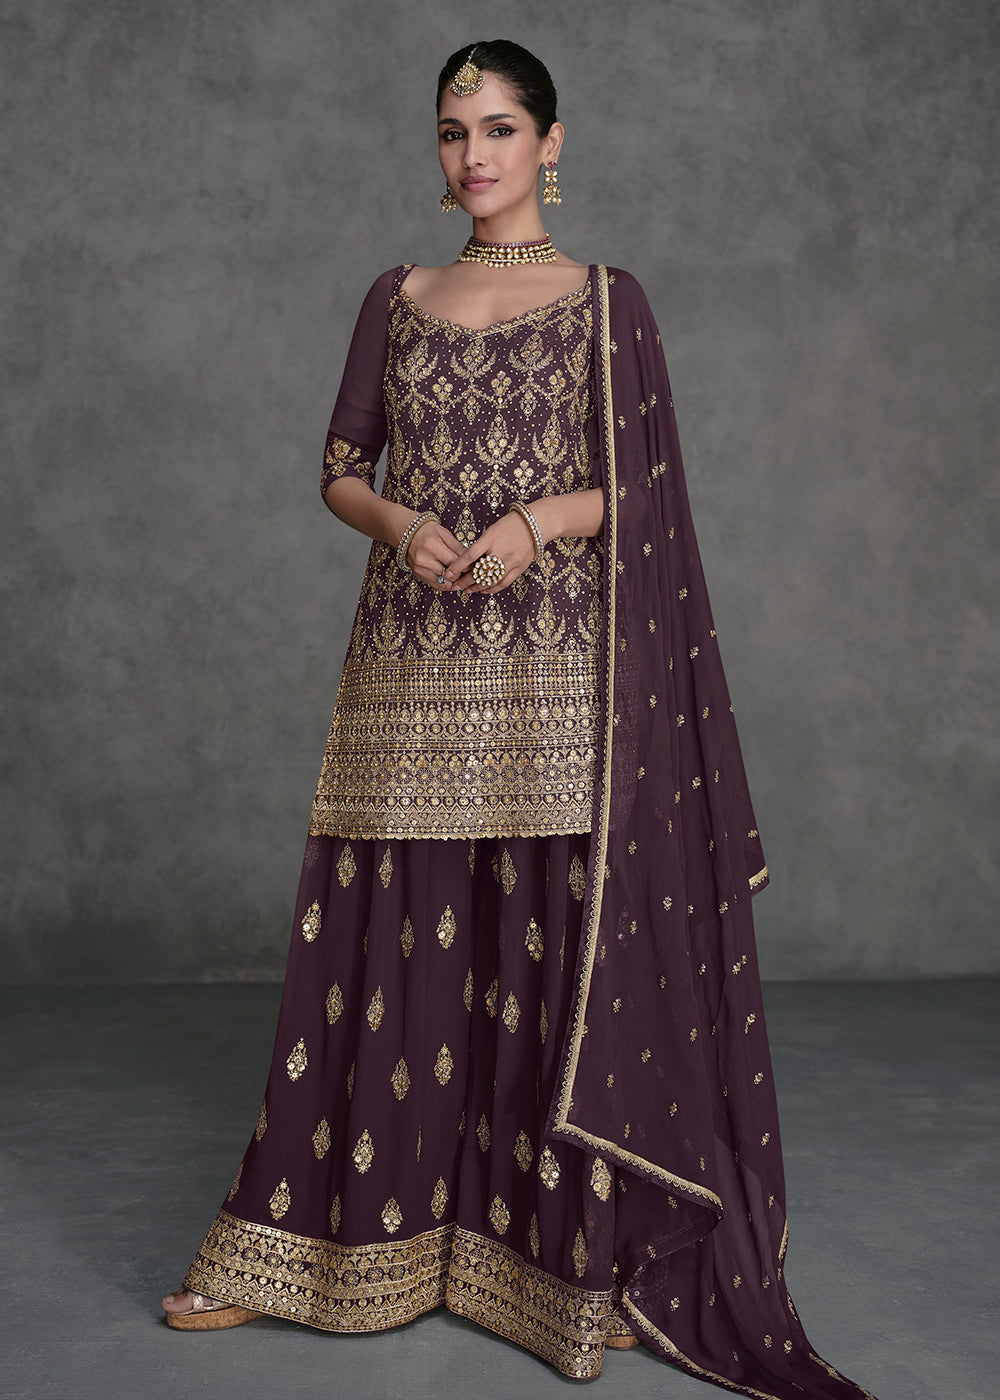 Shop Now Dark Purple Designer Style Wedding Wear Sharara Suit Online at Empress Clothing in USA, UK, Canada, Italy & Worldwide.